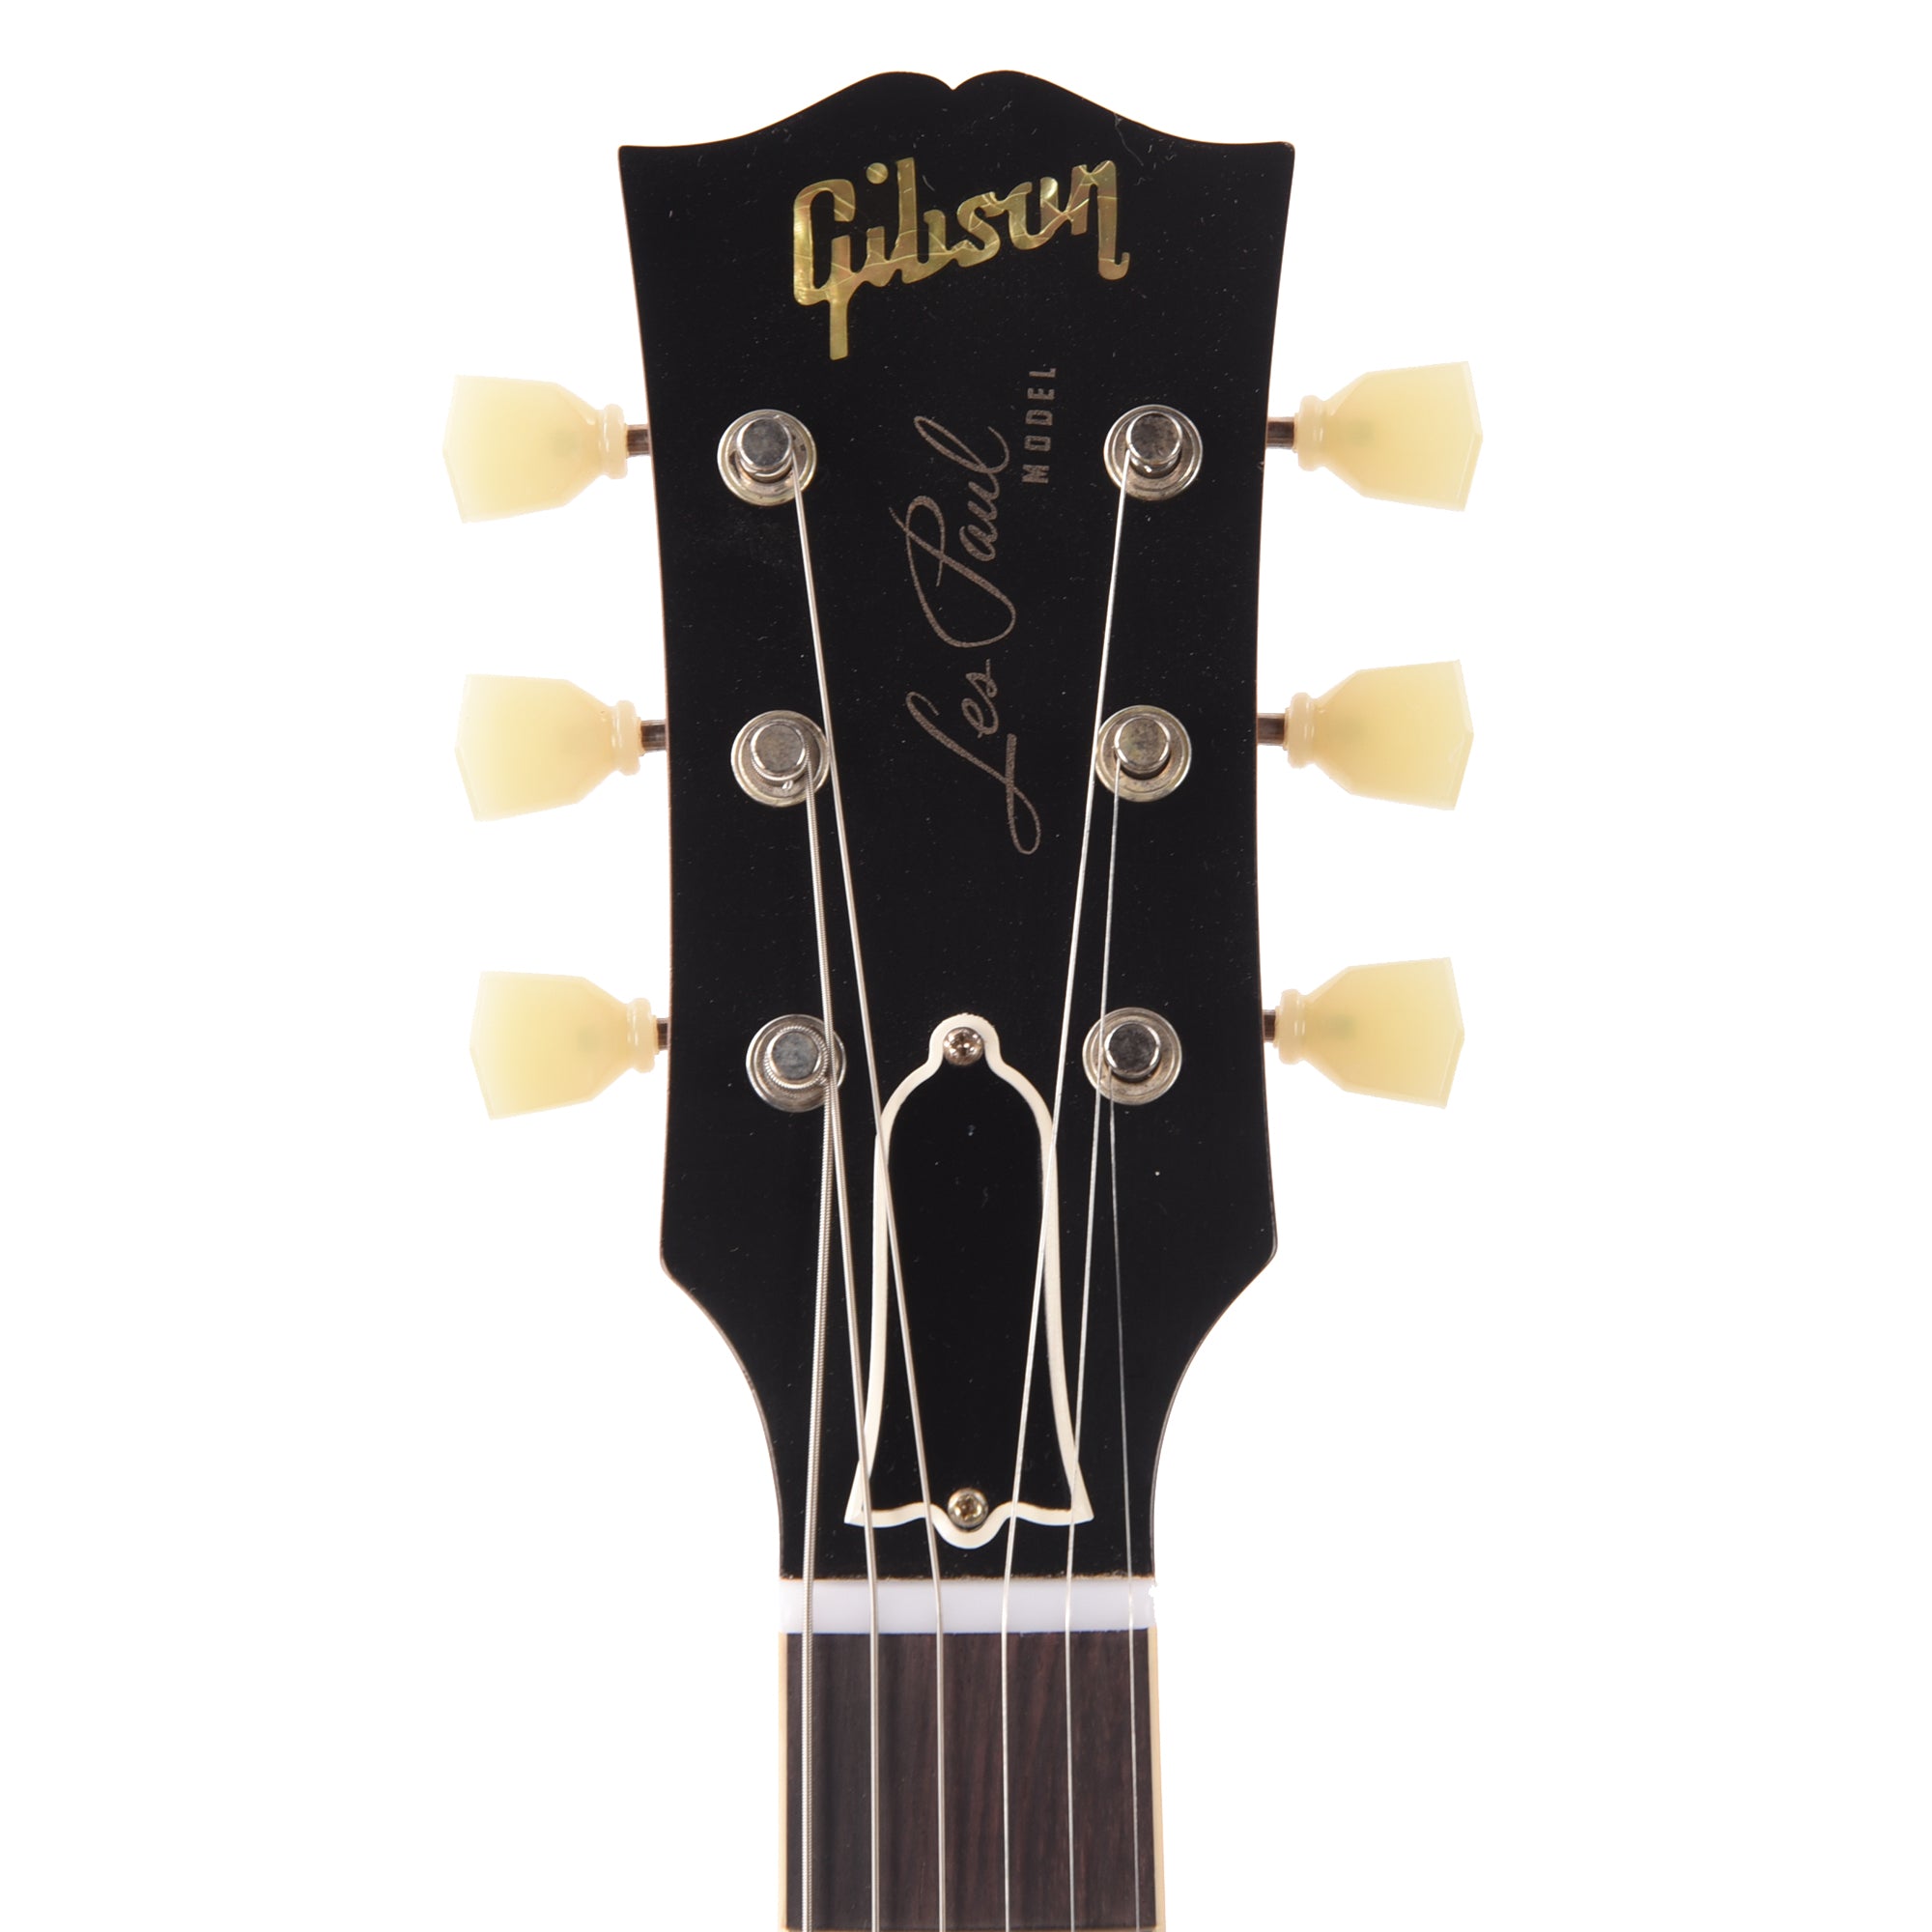 Gibson Custom Shop Murphy Lab 1958 Les Paul Standard Reissue Bourbon Burst Ultra Light Aged